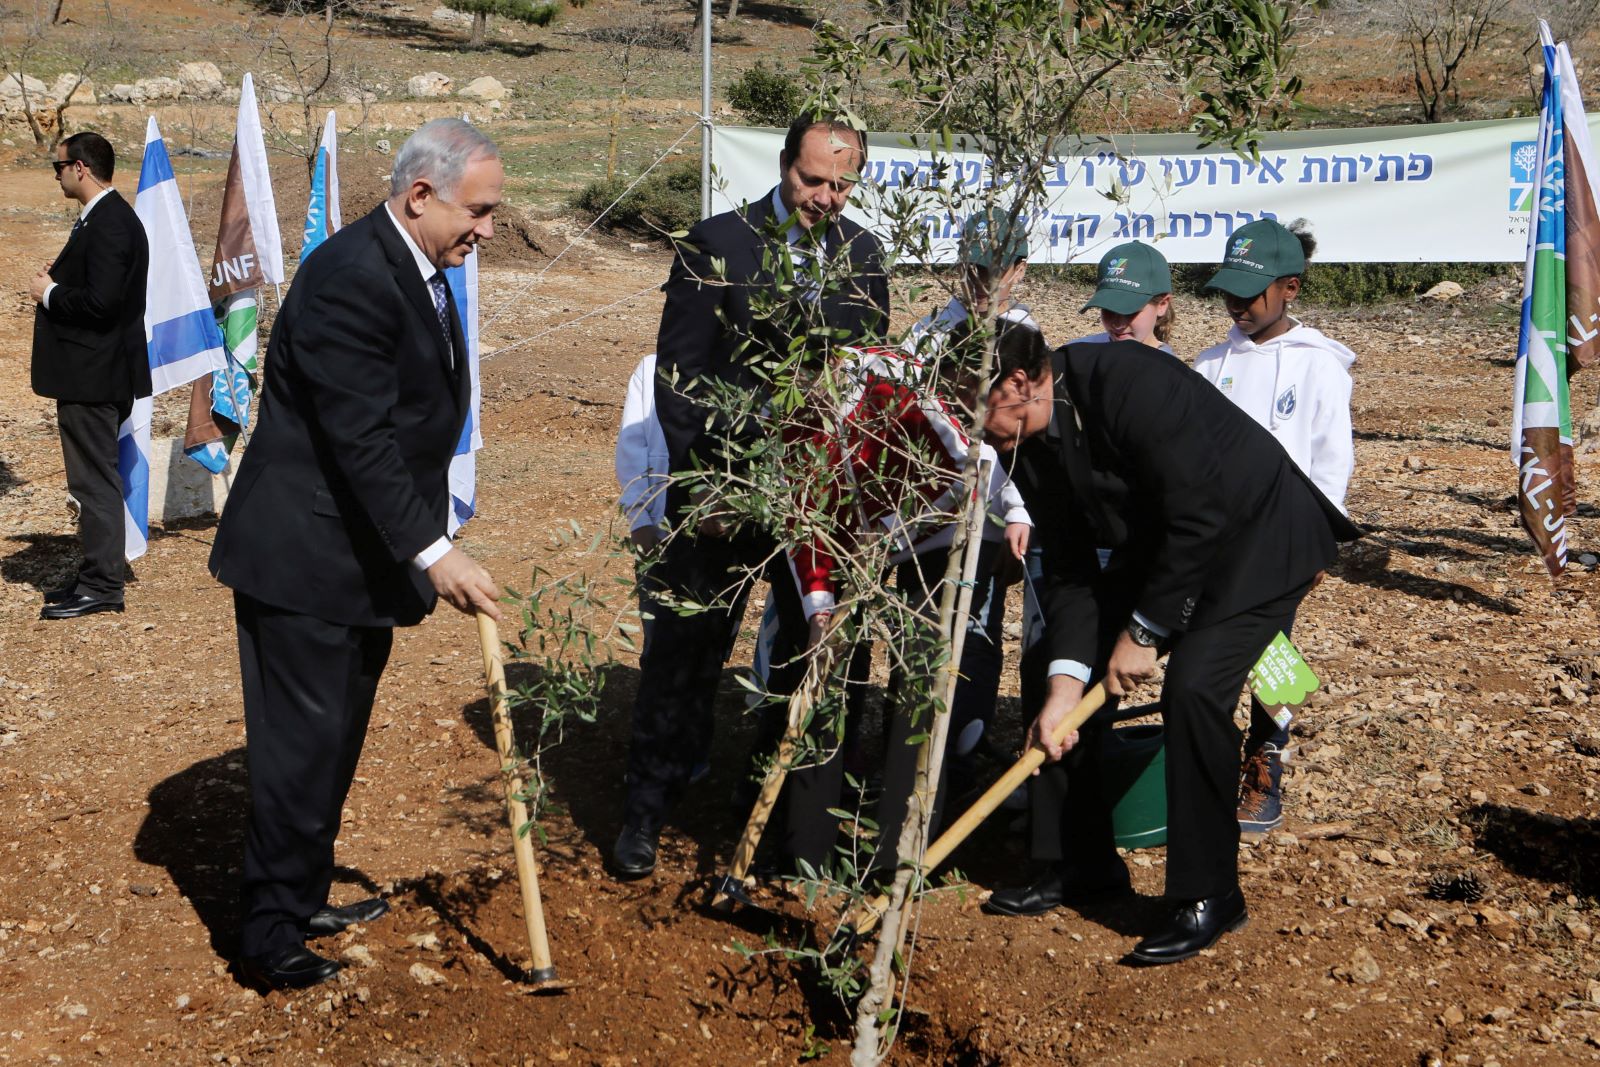 Israeli Prime Minister Benjamin Netanyahu, Jerusalem mayor Nir Barkat, and Effi Stenzler, chairman of the KKL-JNF, take part in a "Tu Bishvat" tradition of planting trees, in the Jerusalem forest on January 15, 2014. (Yossi Zamir/Flash 90)